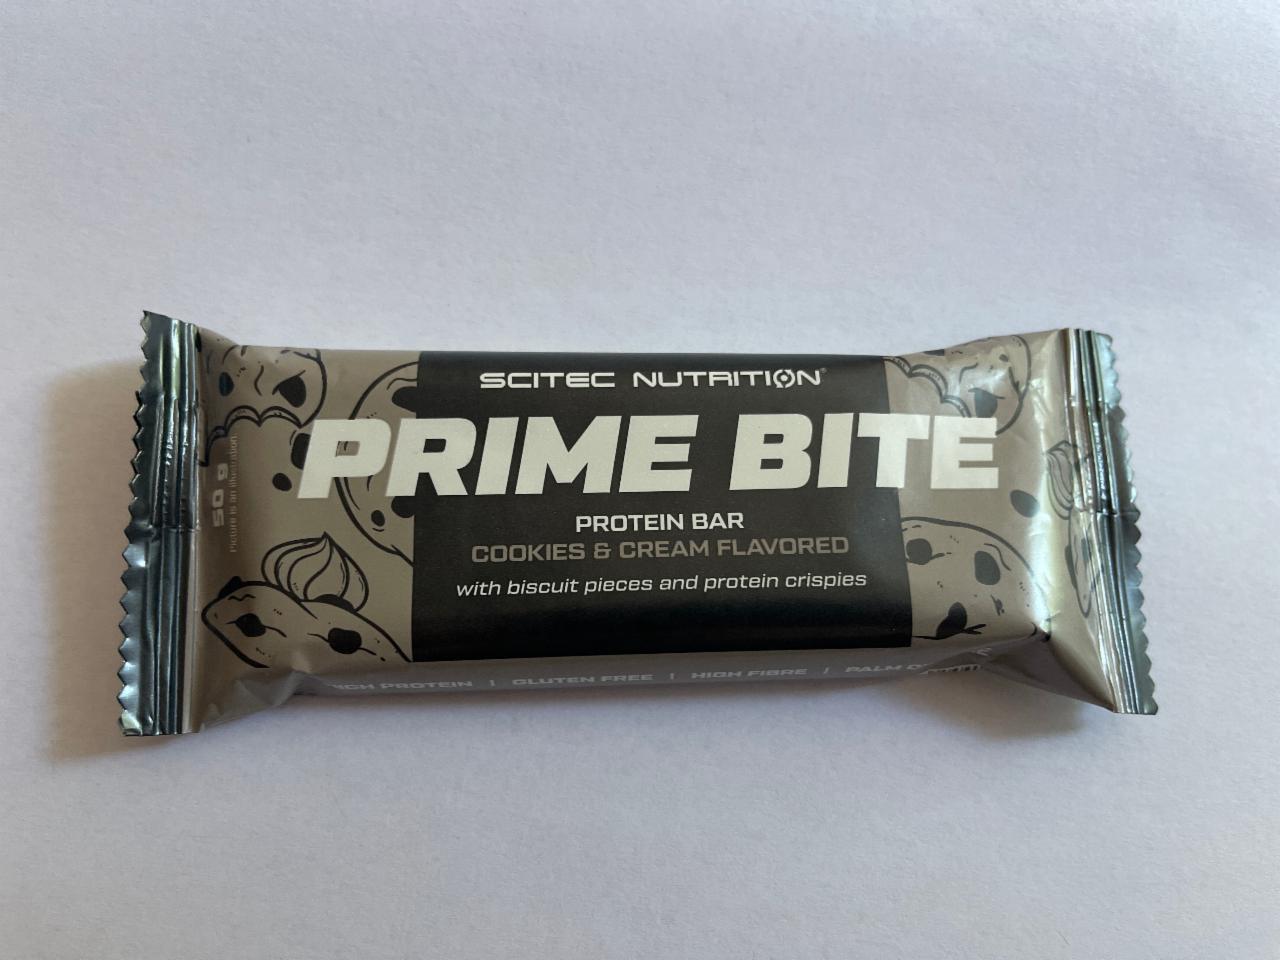 Képek - Prime bite protein bar Cookies & cream Scitec nutrition